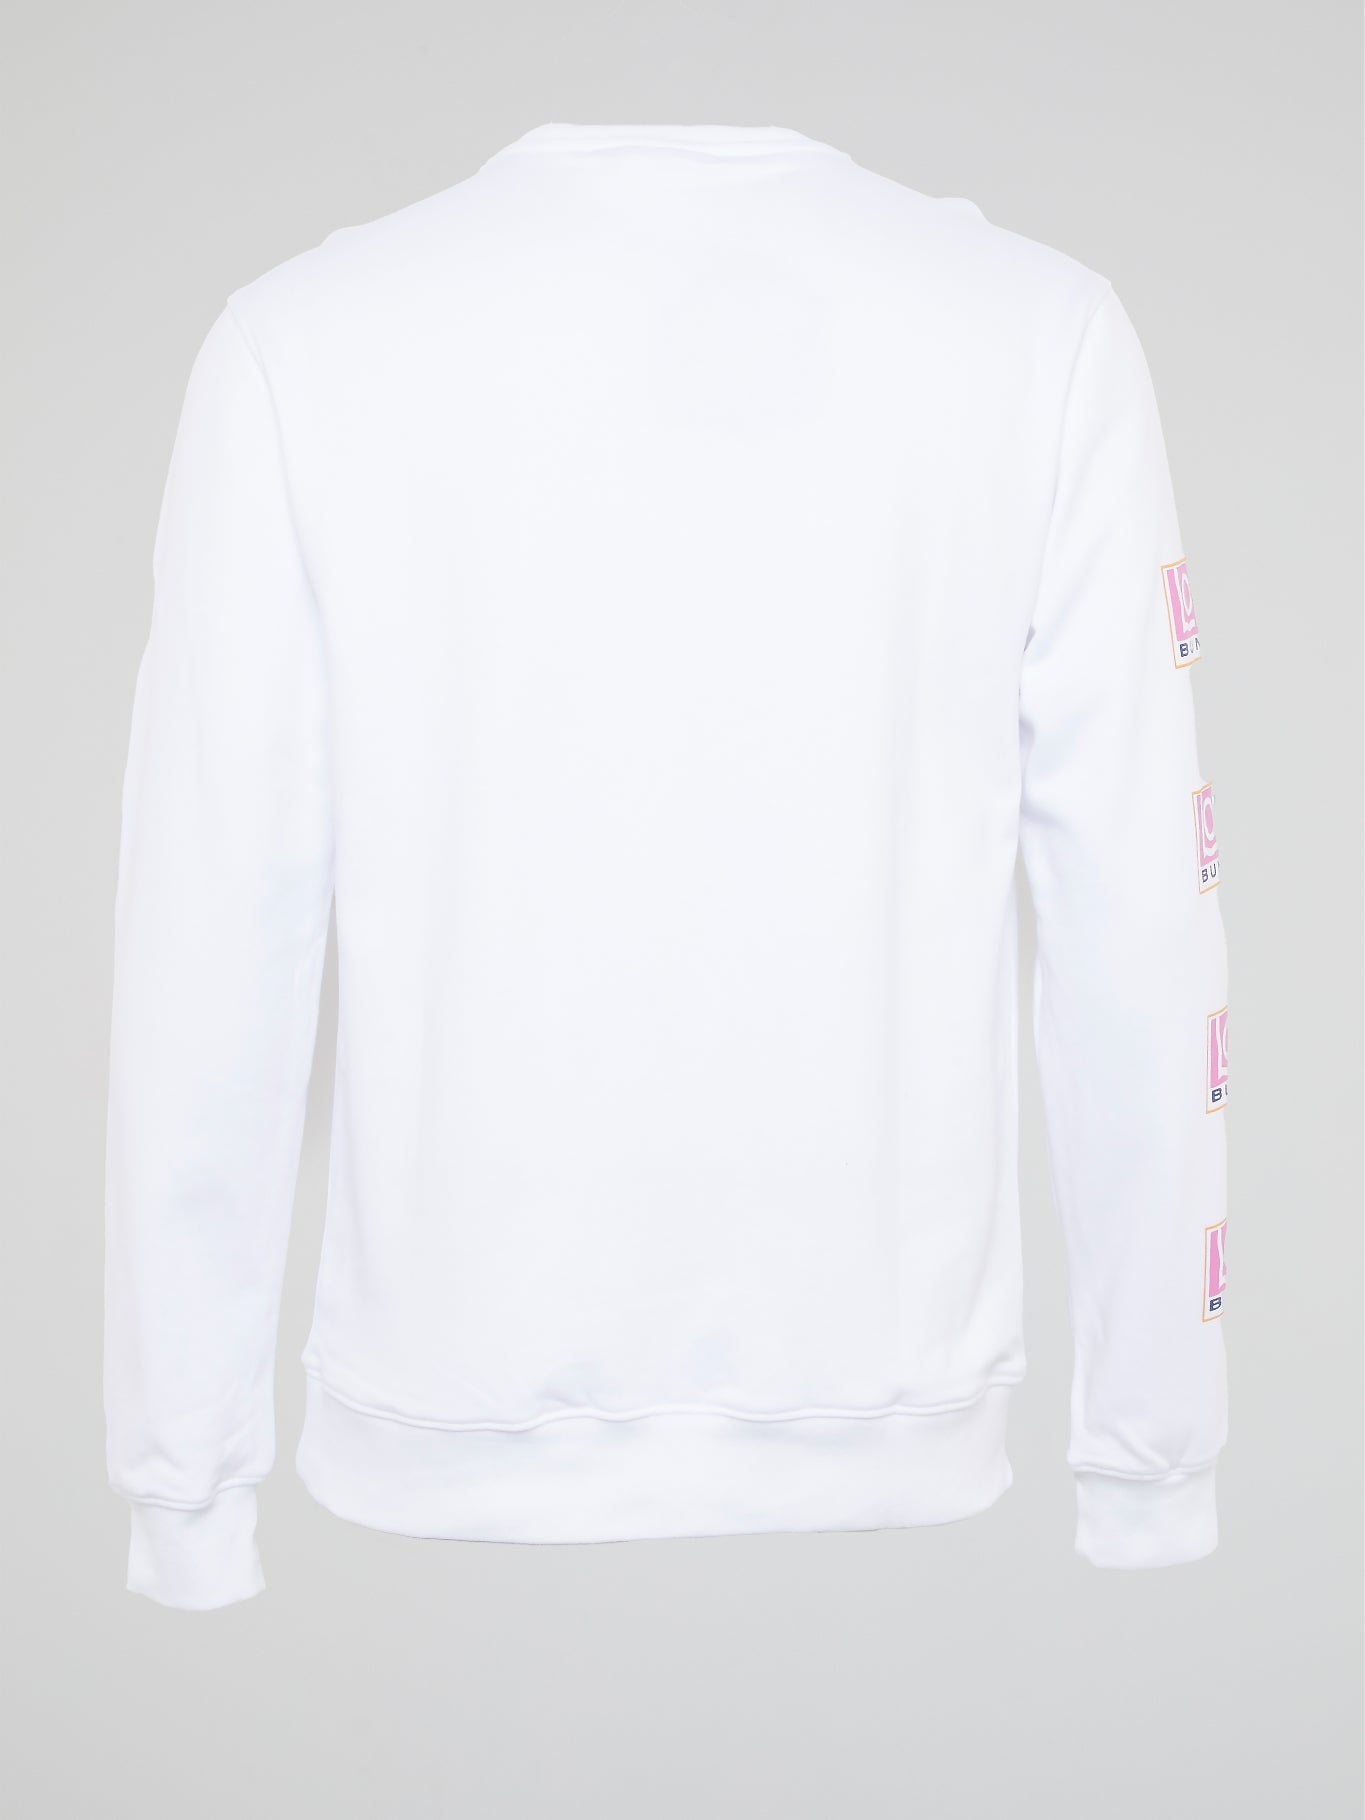 Lola Bunny White Crewneck Sweatshirt